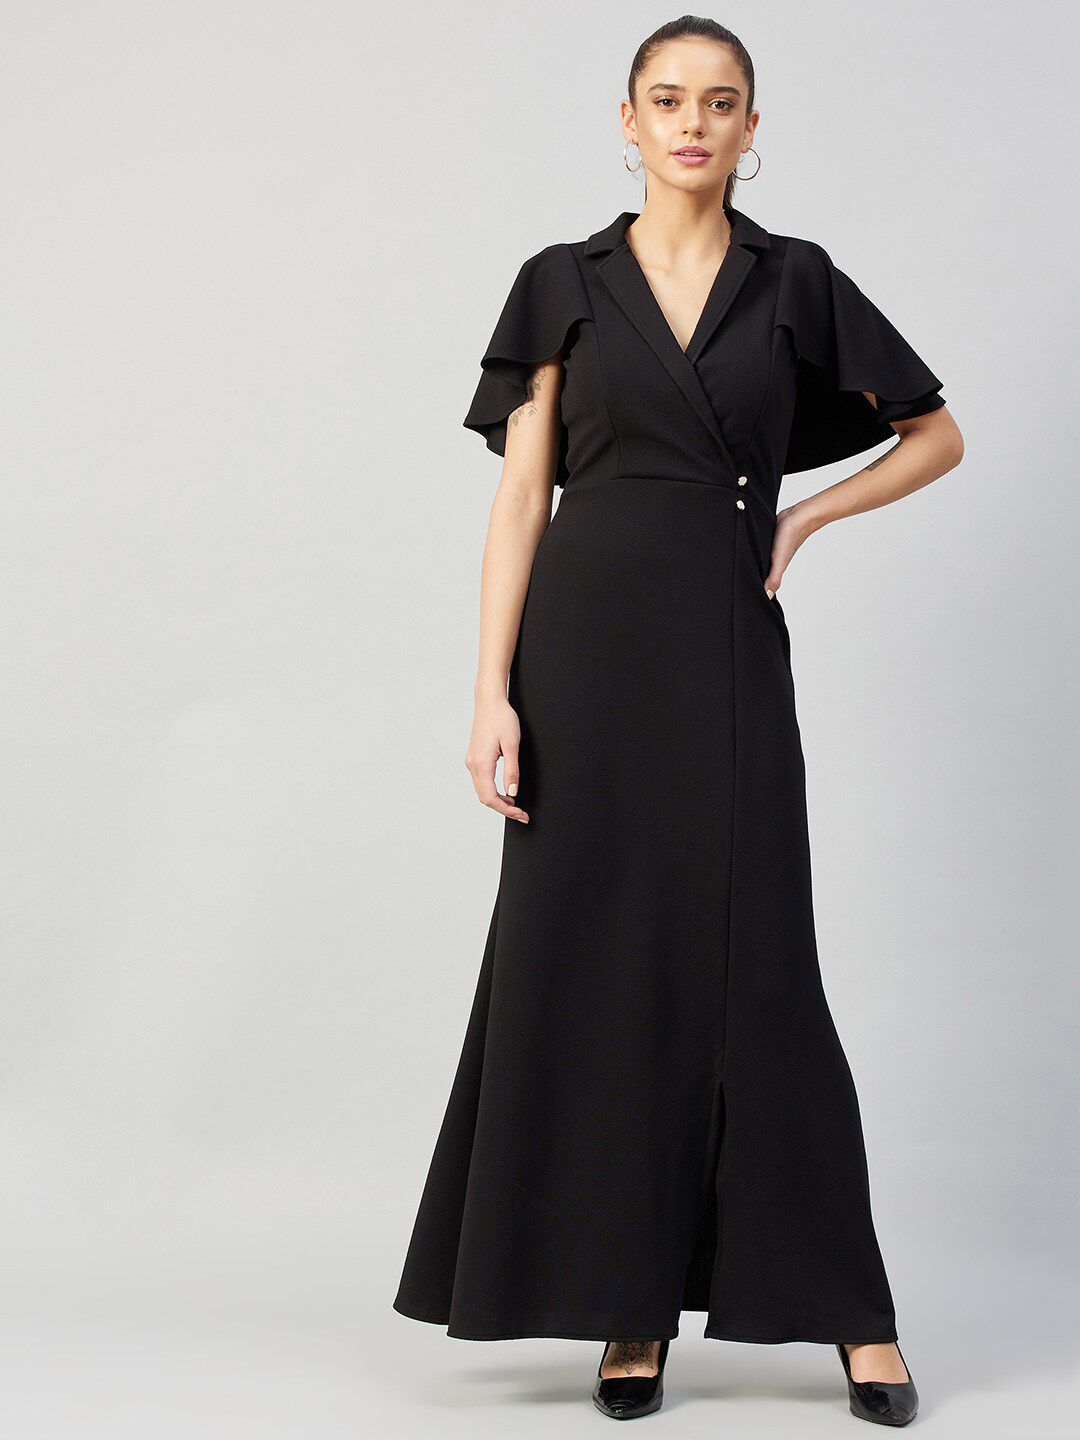 Athena Black Maxi Dress Price in India